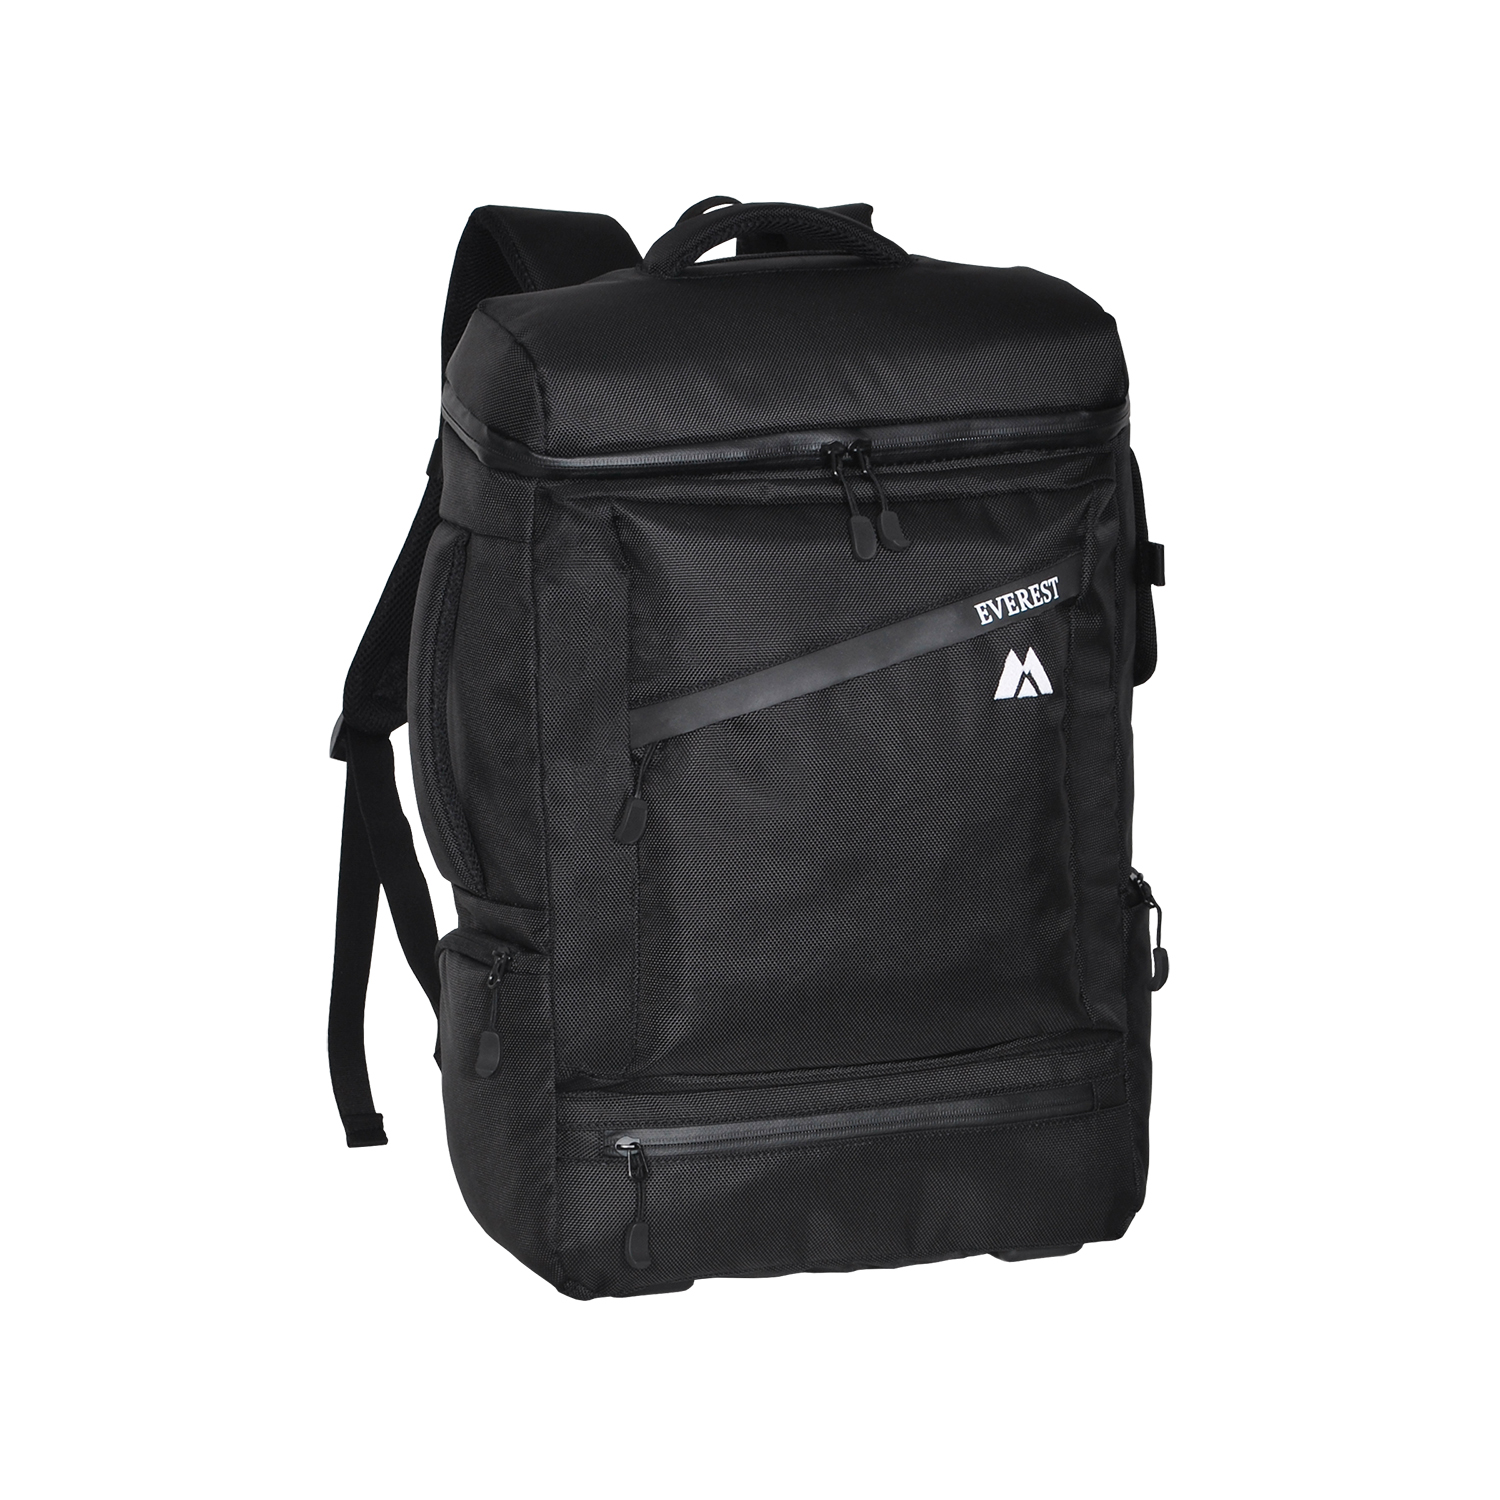 Everest Urban Backpack - image 1 of 2